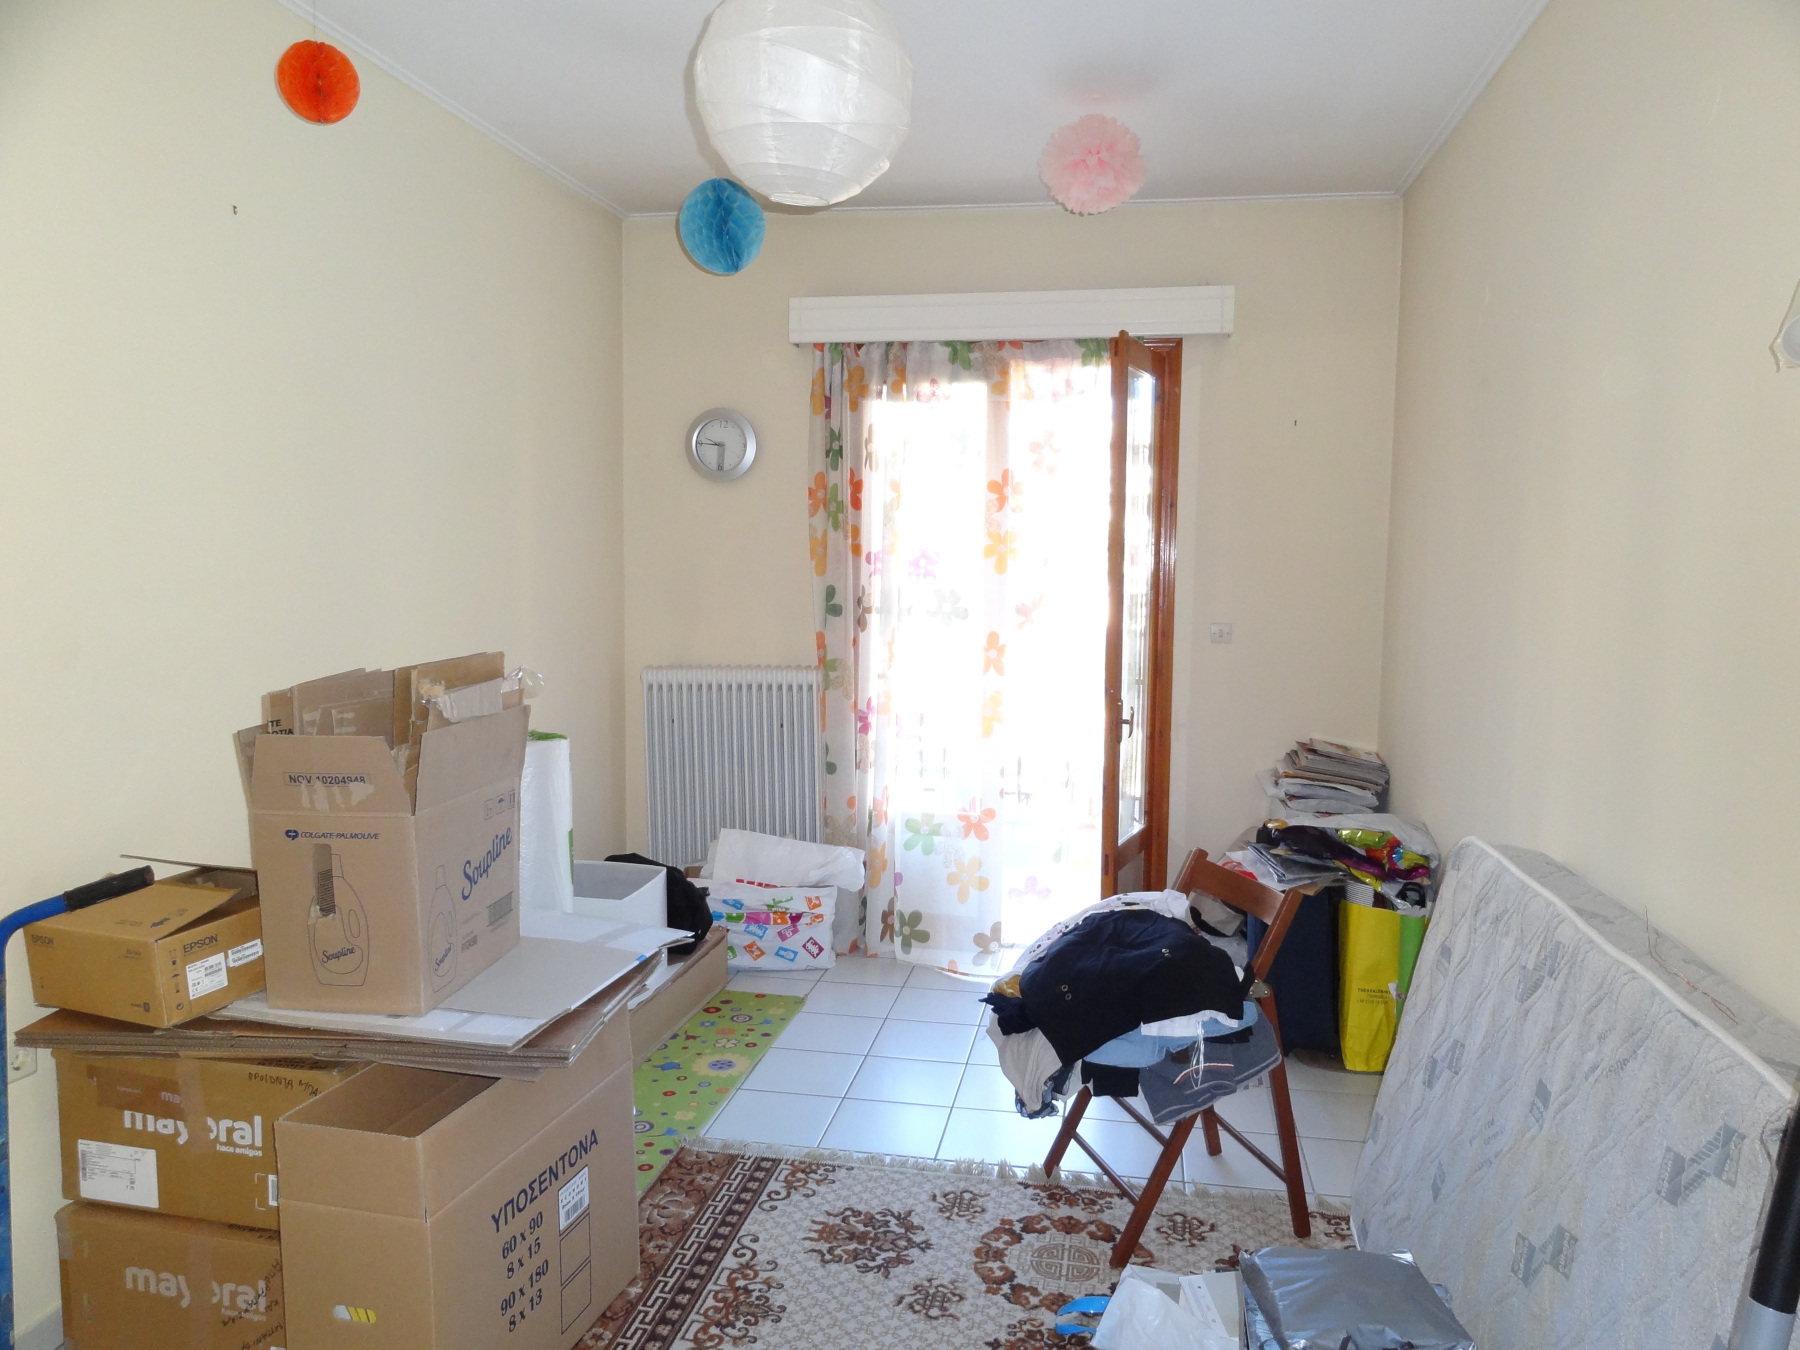 1 bedroom apartment for rent, 55 sq.m. mezzanine in the area of Karavatia in Ioannina